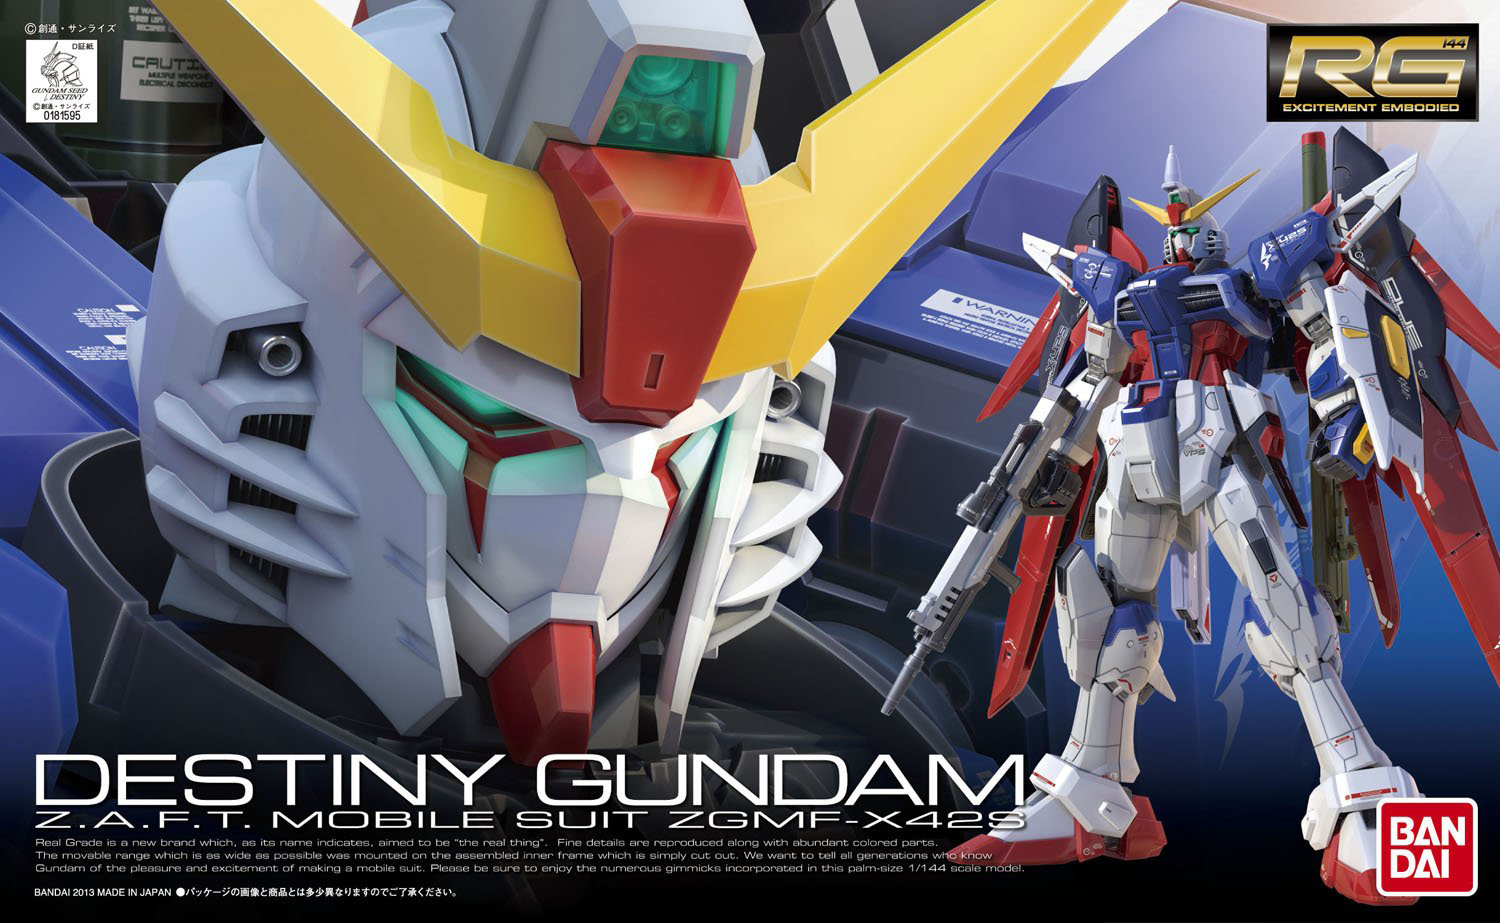 RG 1/144 ZGMF-X42S デスティニーガンダム [Destiny Gundam] 0181595 4543112815958 5061616 4573102616166